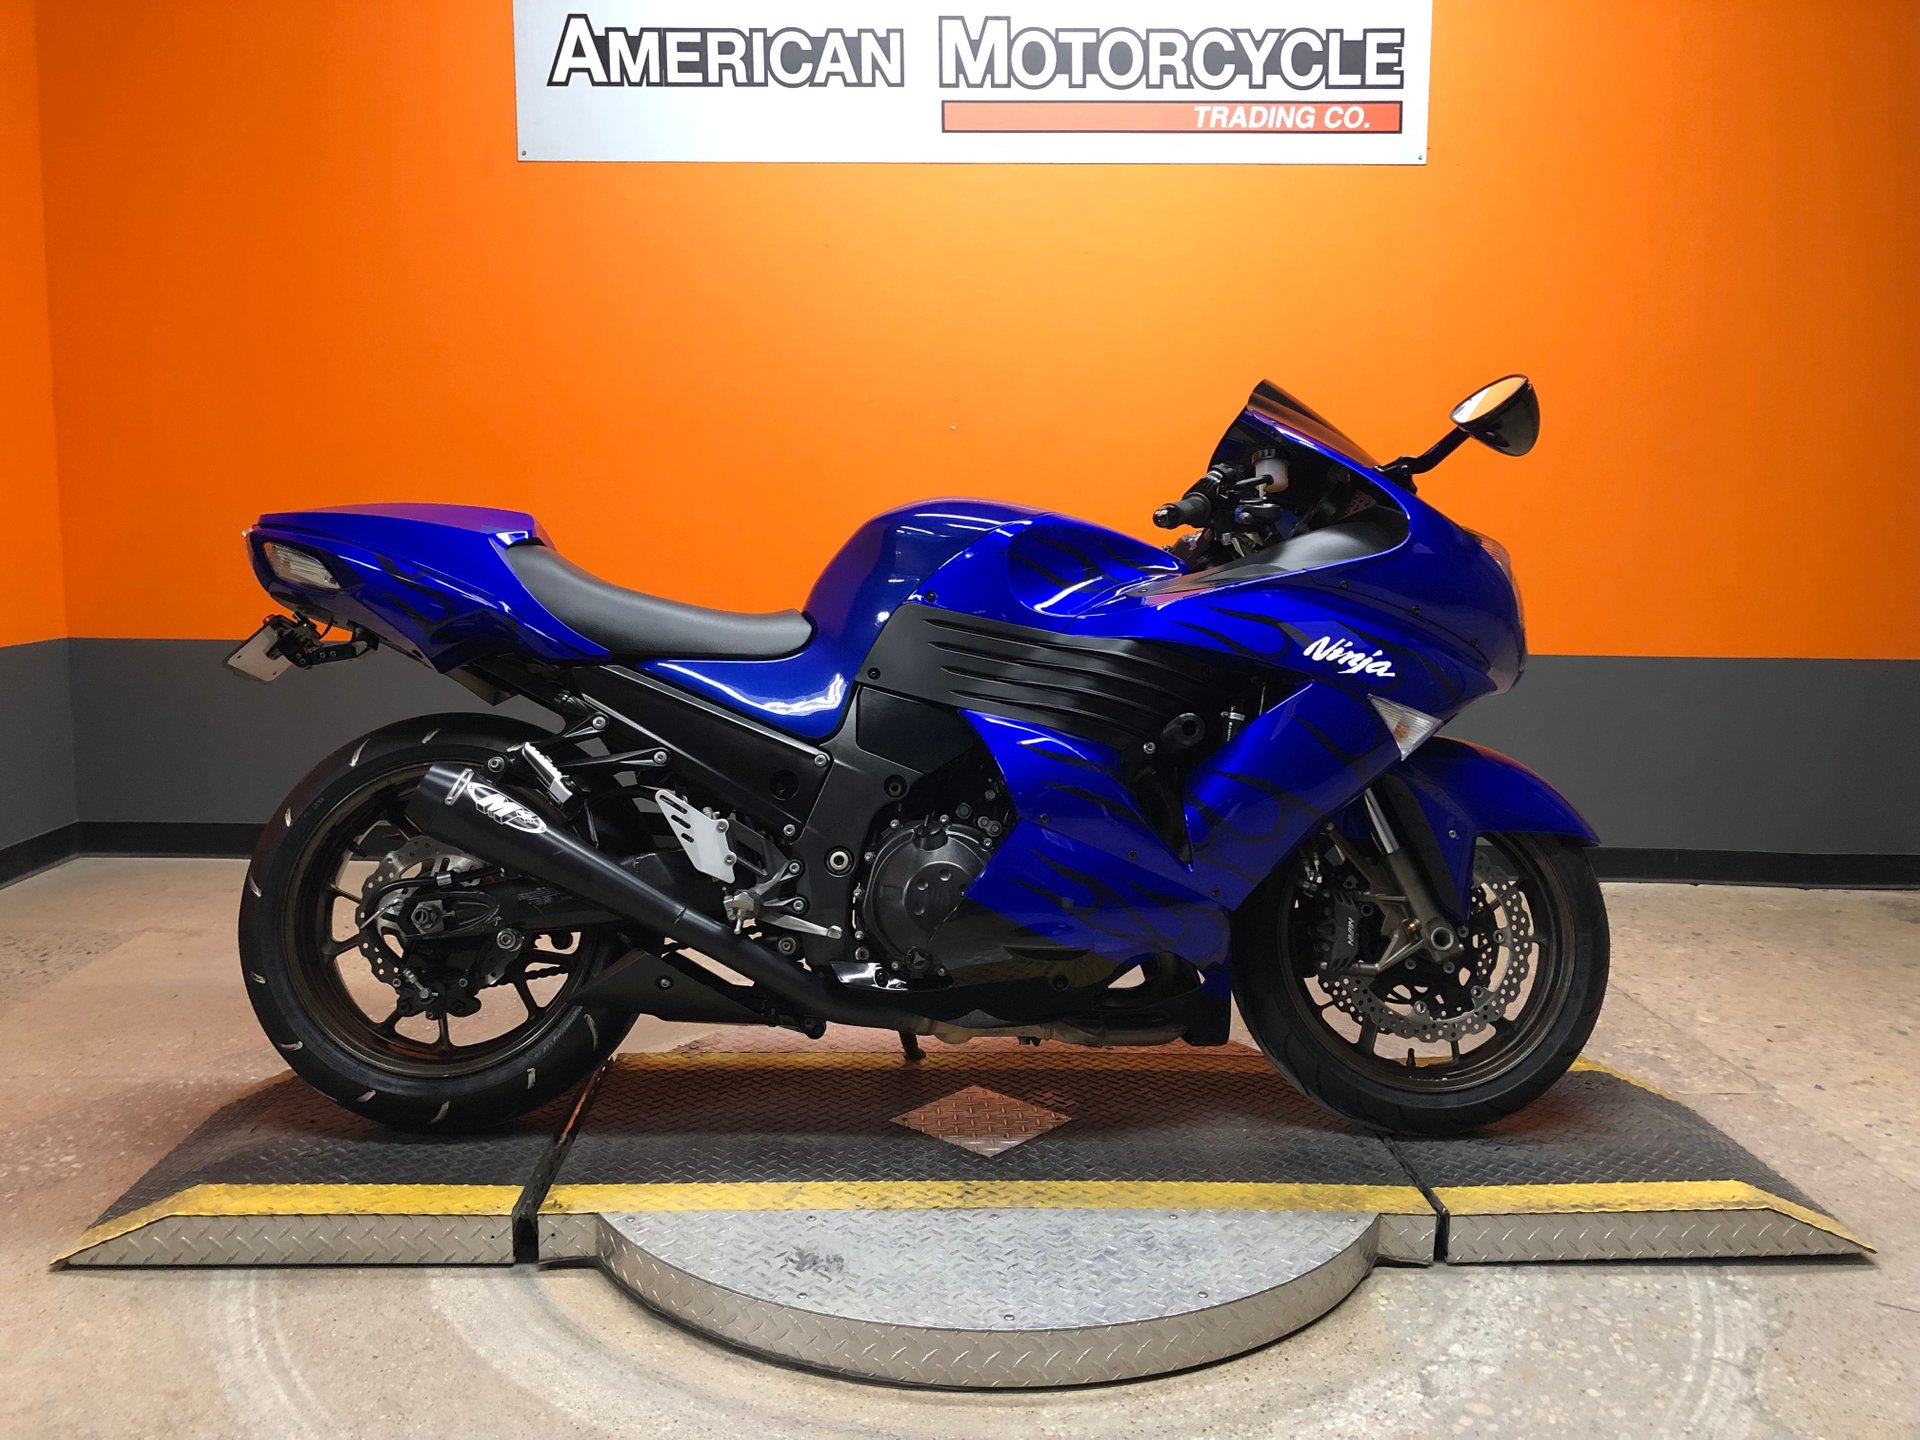 2006 Kawasaki Ninja | American Motorcycle Trading Company - Used 